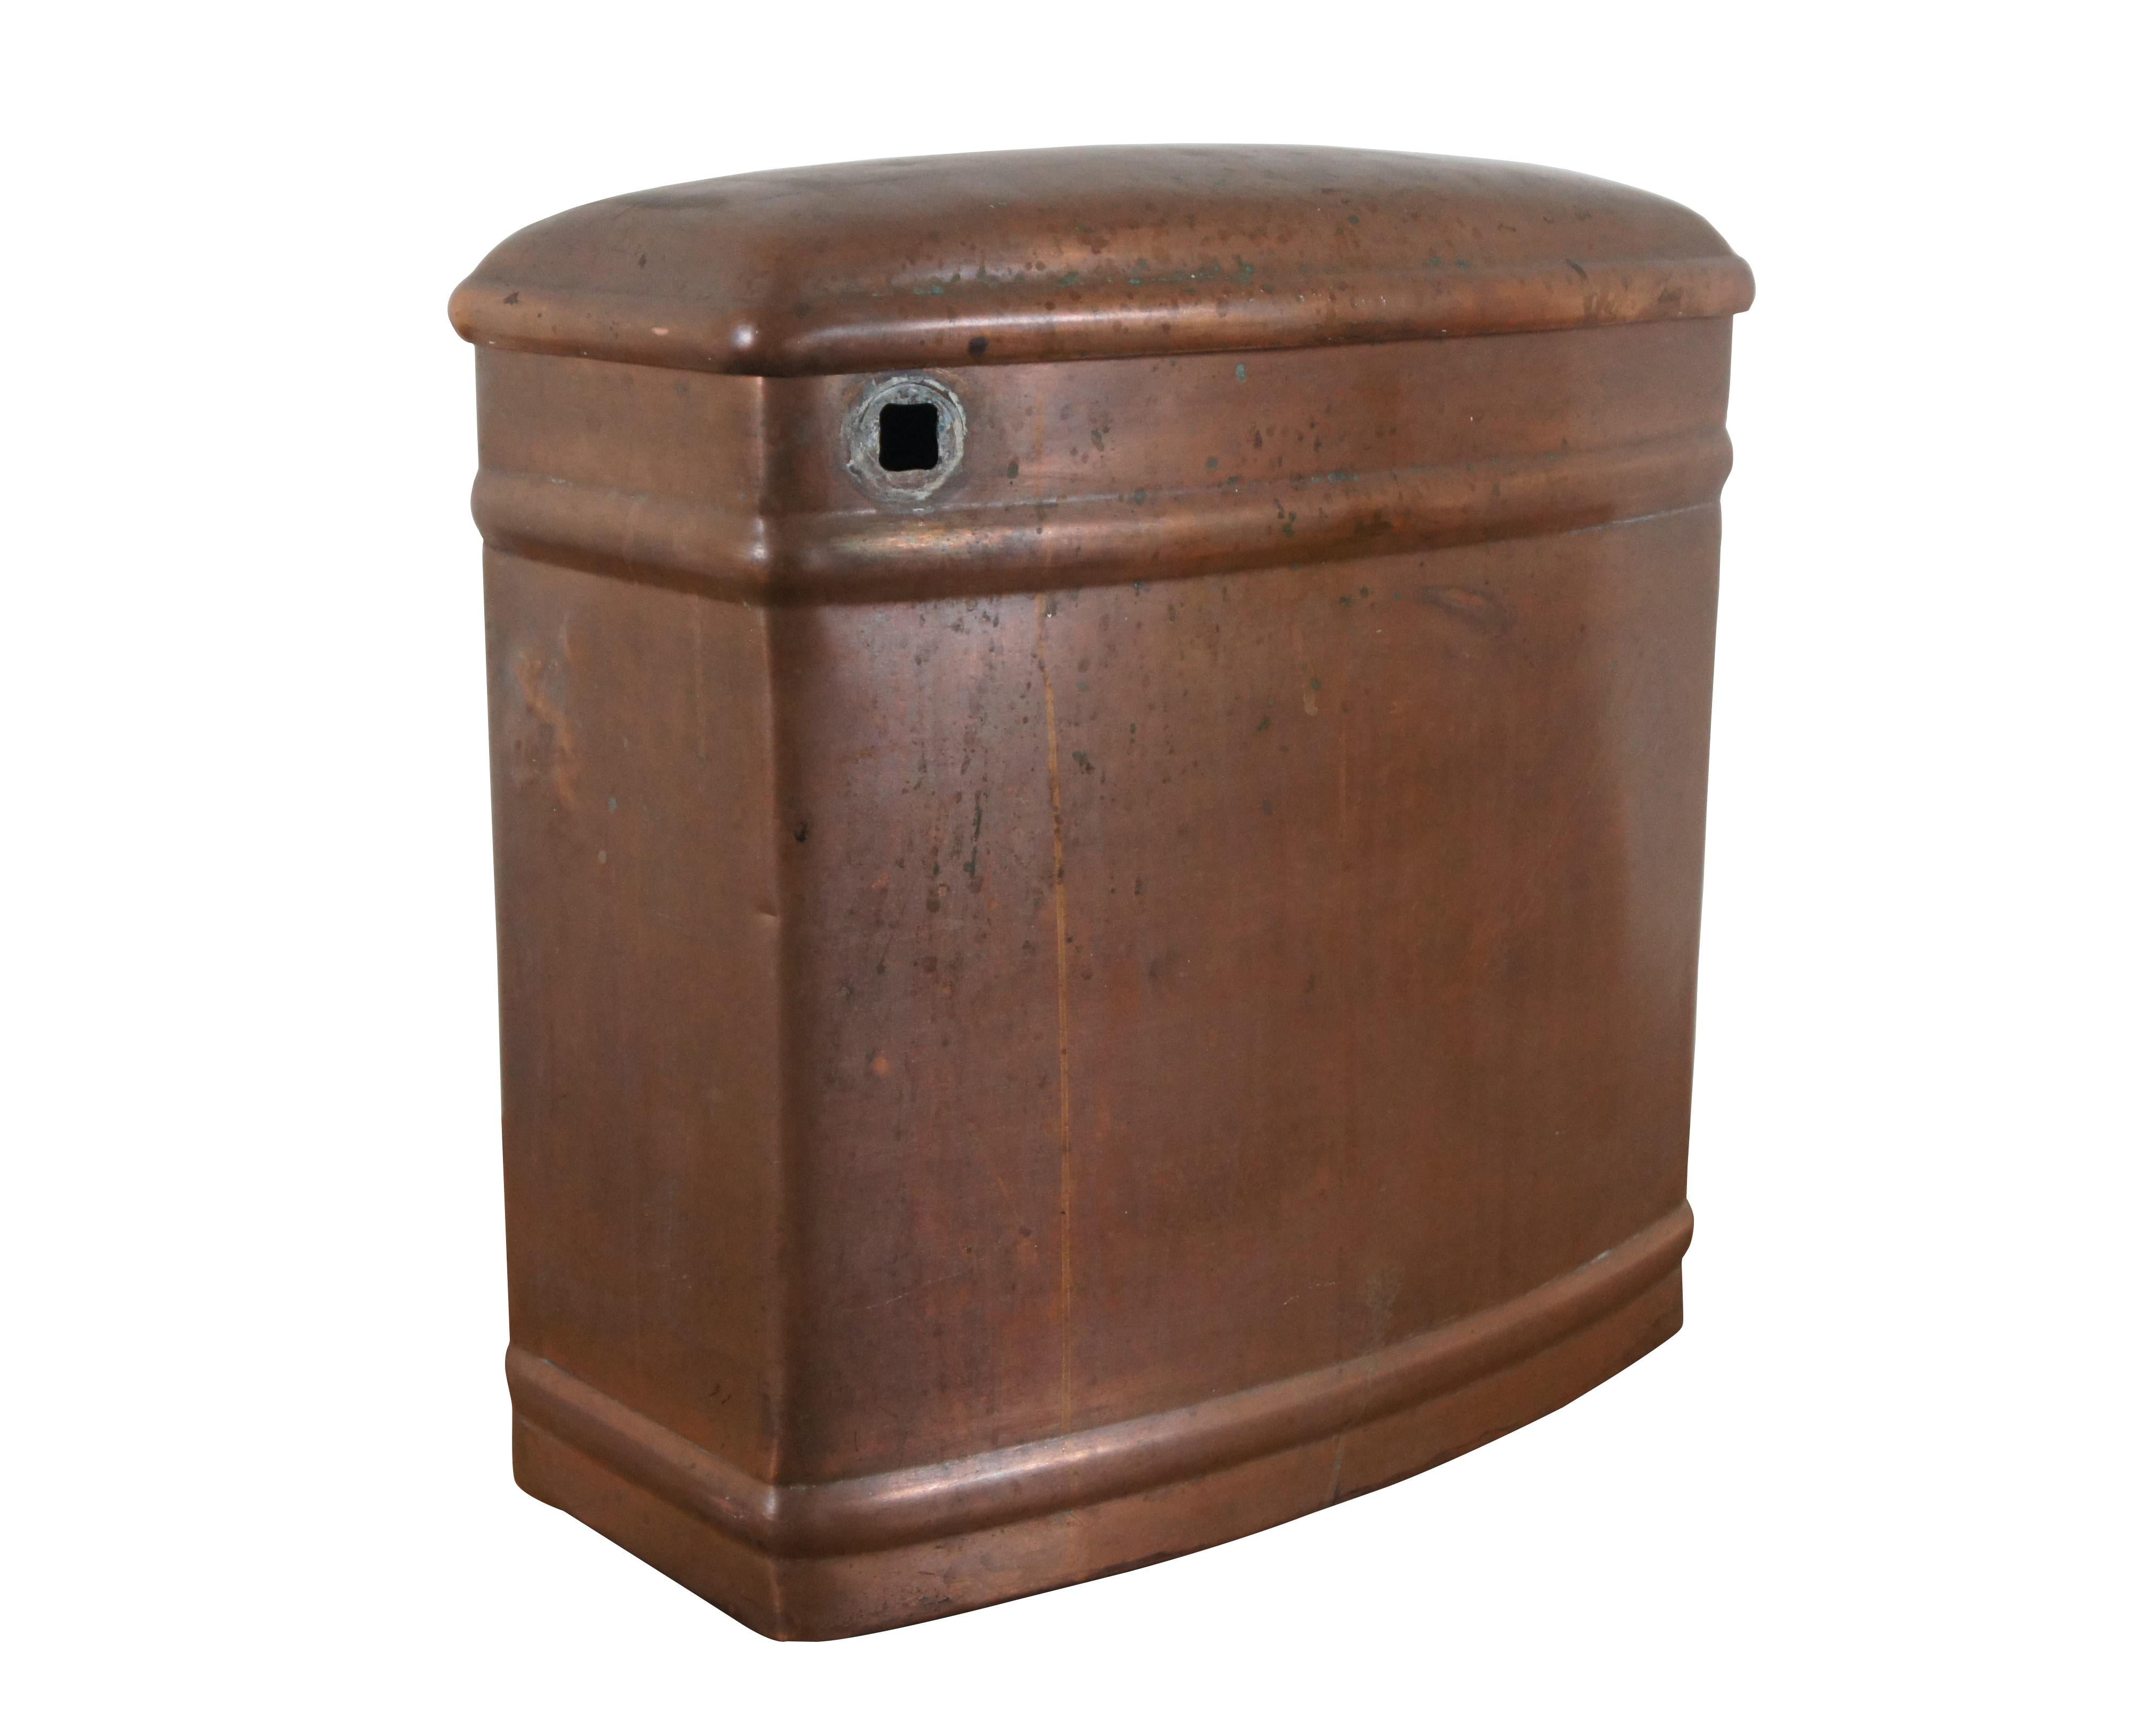 Rare Antique Victorian White Copper Toilet Tank Bathroom Plumbing Fixture 17